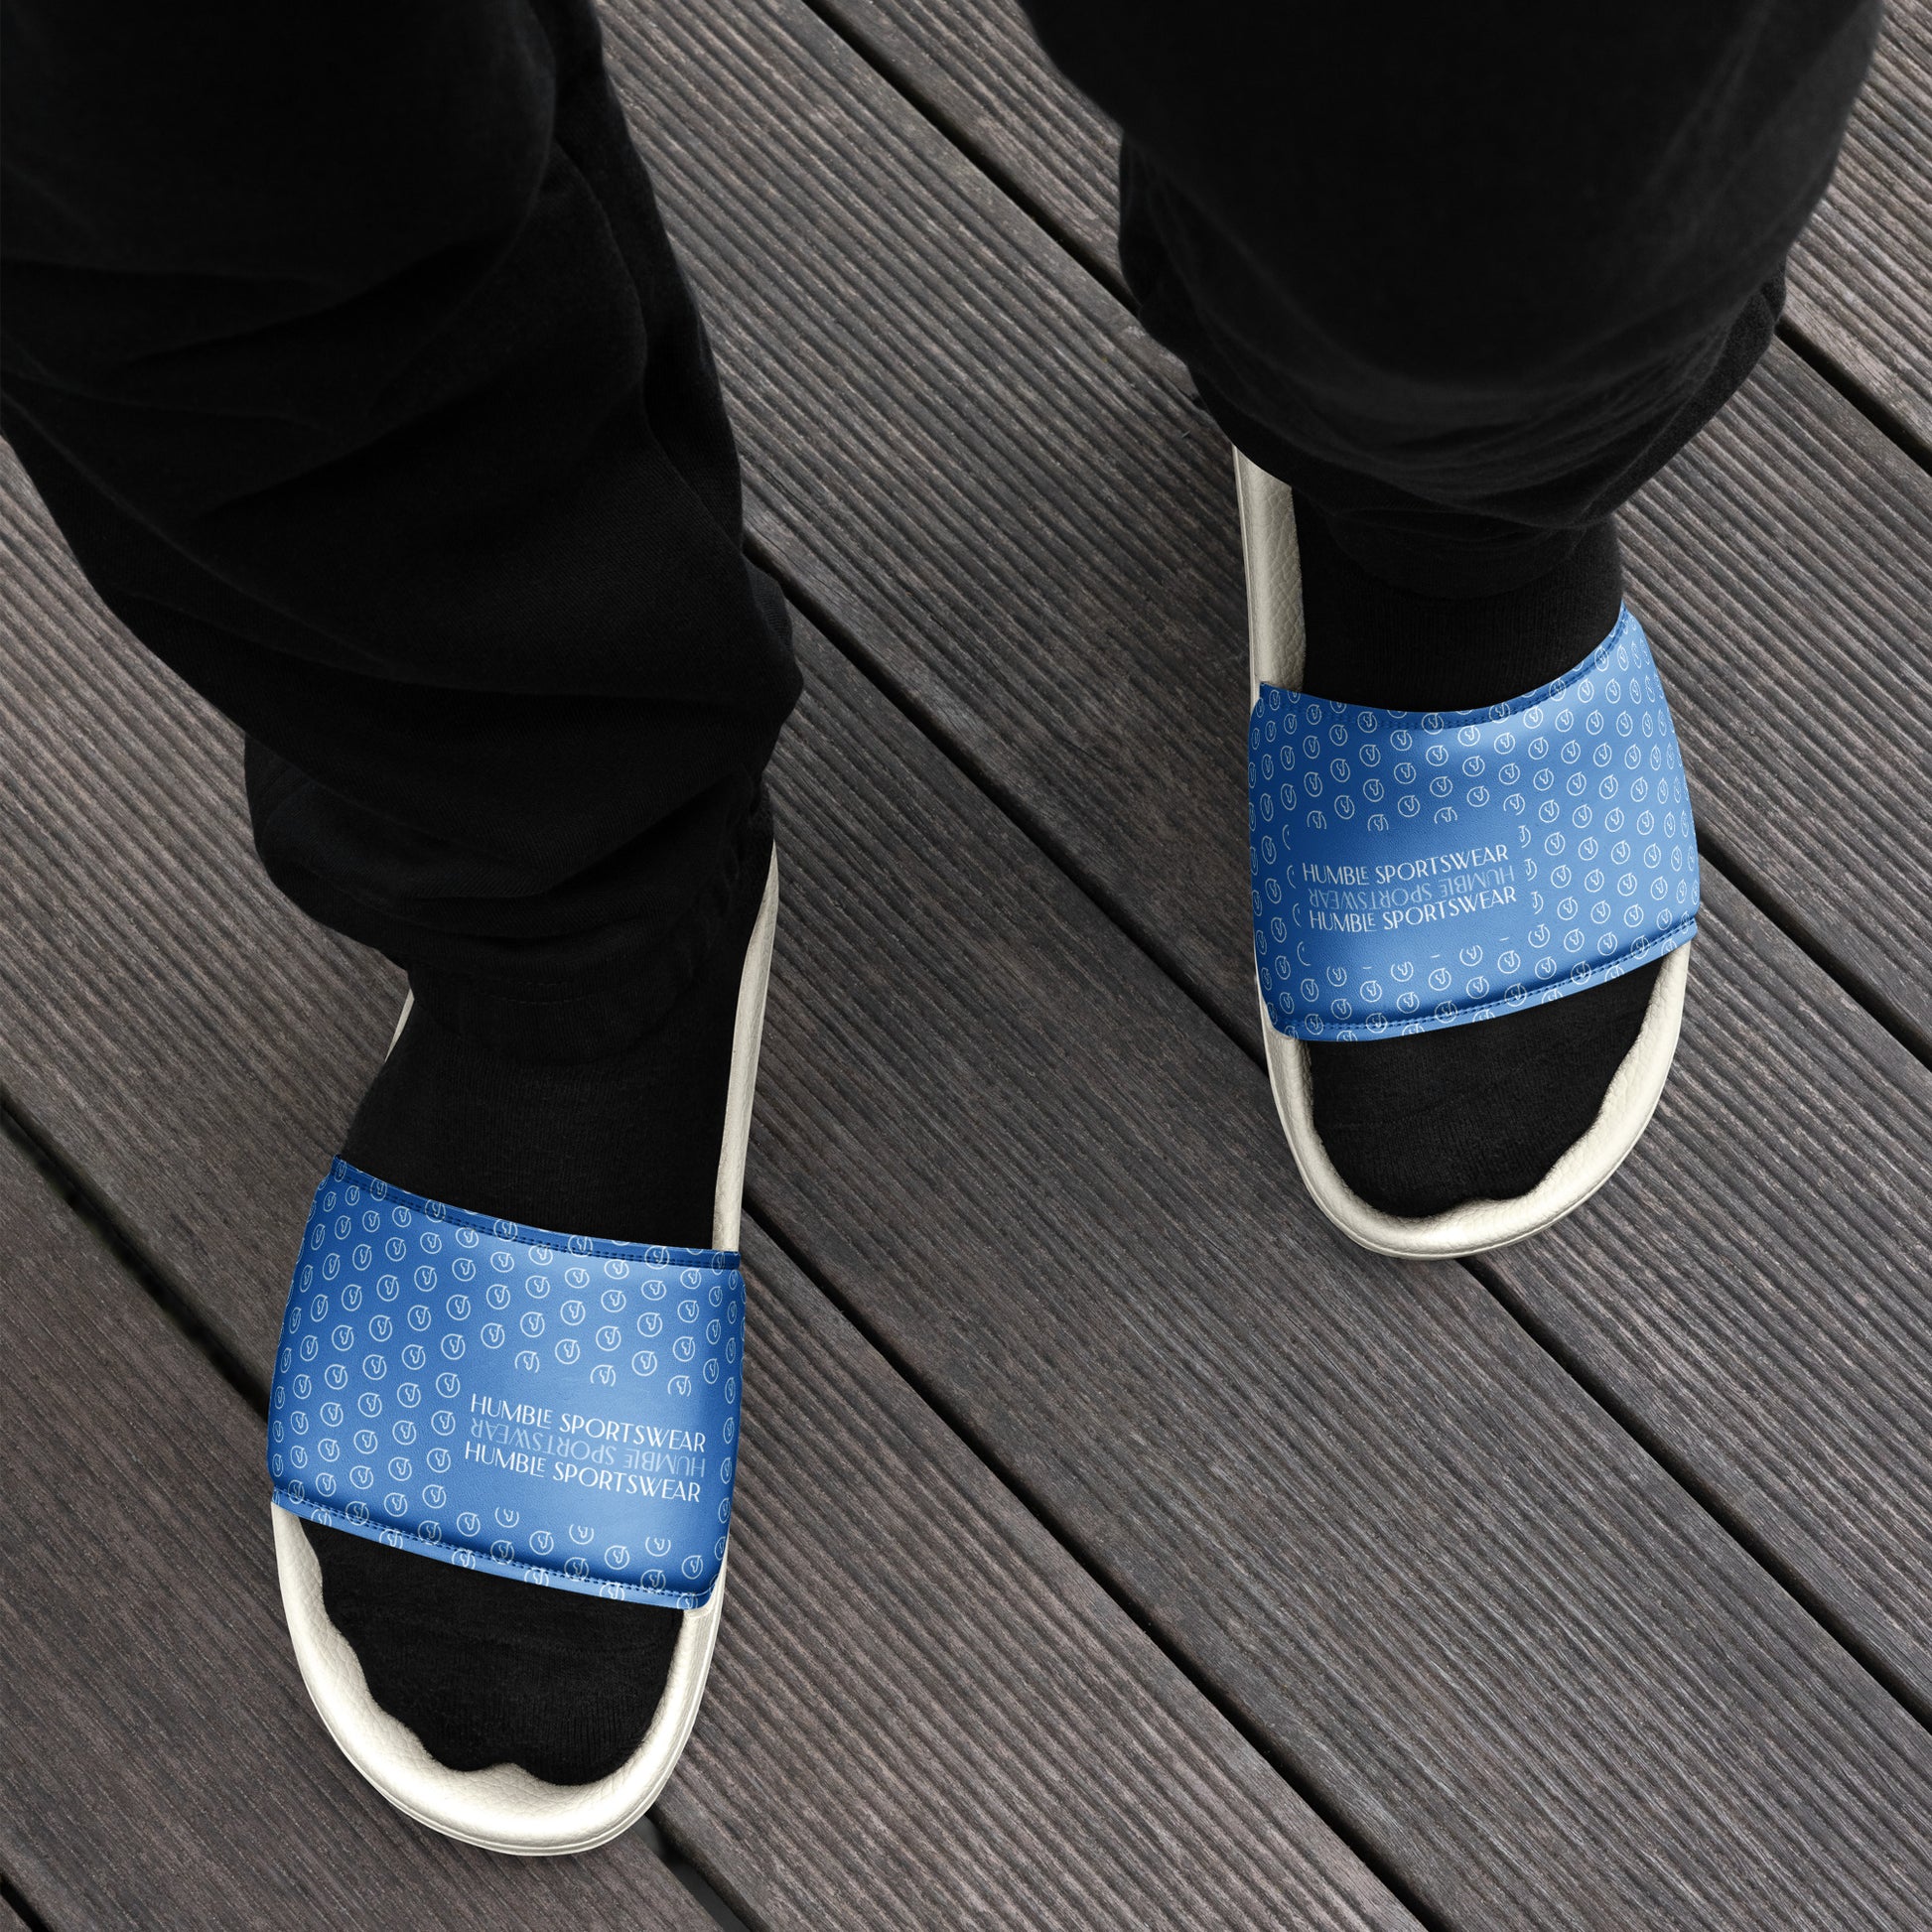 Humble Sportswear, men's color match slides sandals, sky blue open toe casual sandals